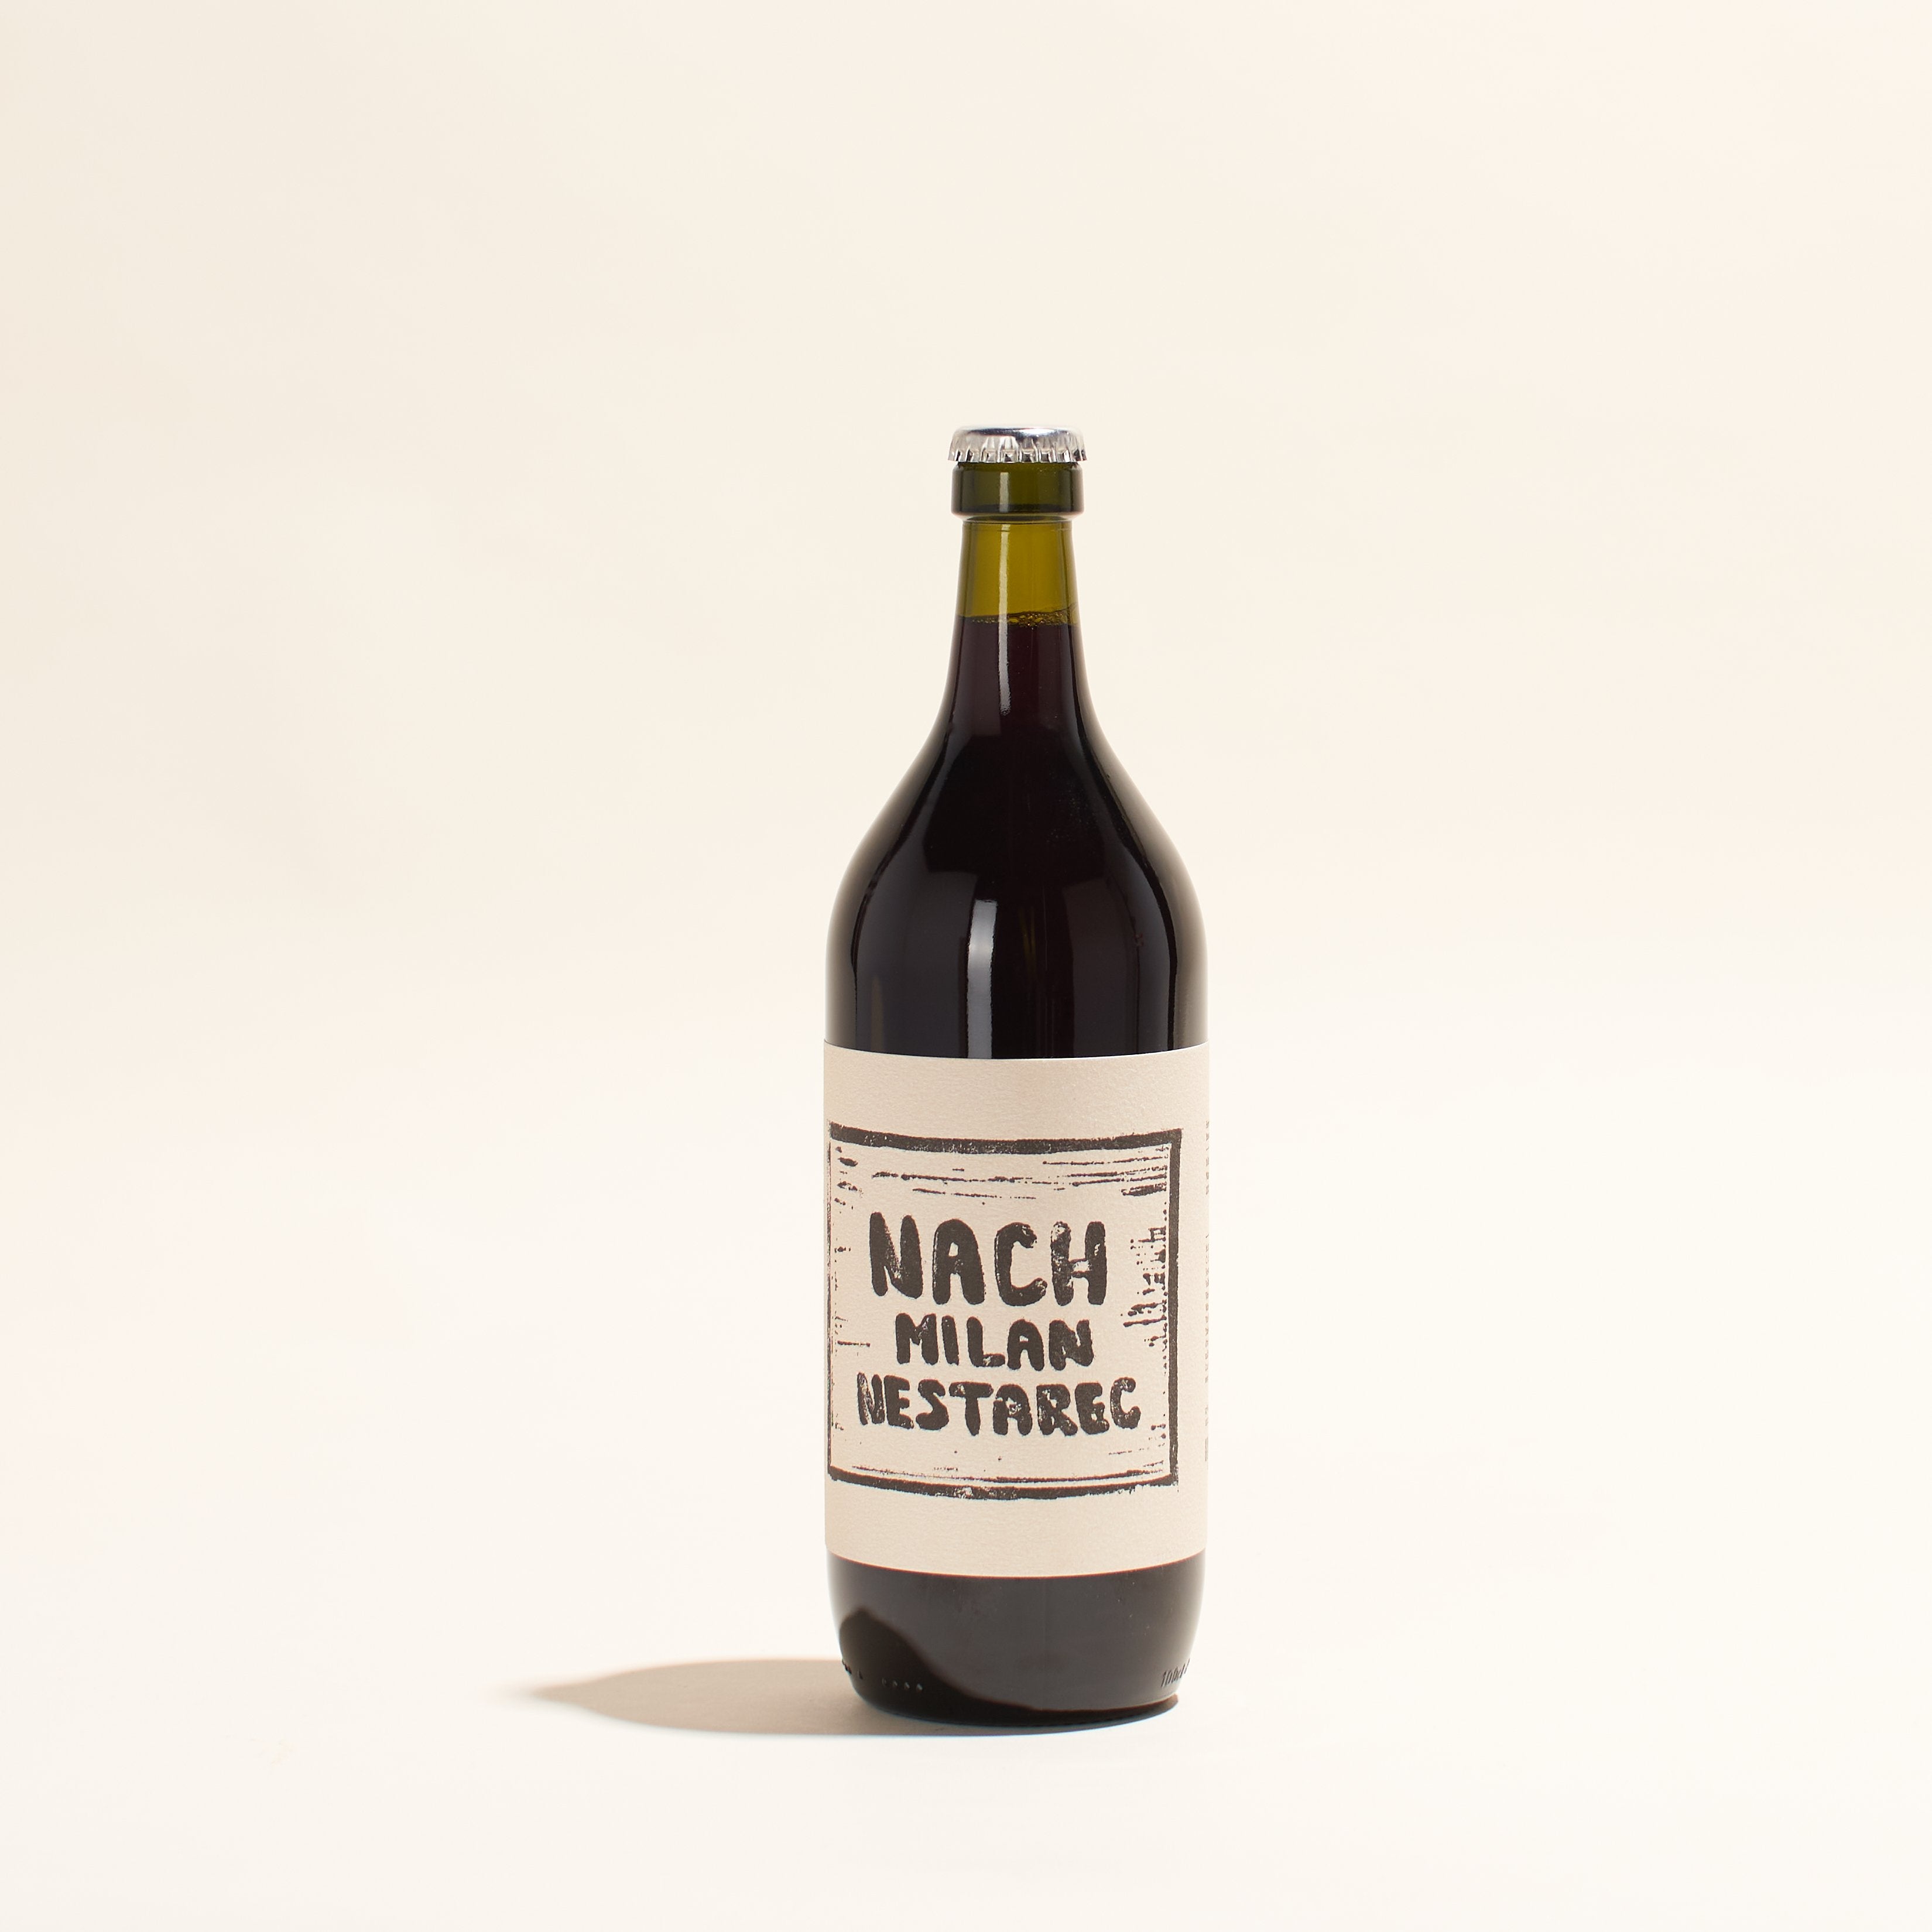 ach nestarec natural Red wine Moravia Czech Republic front label